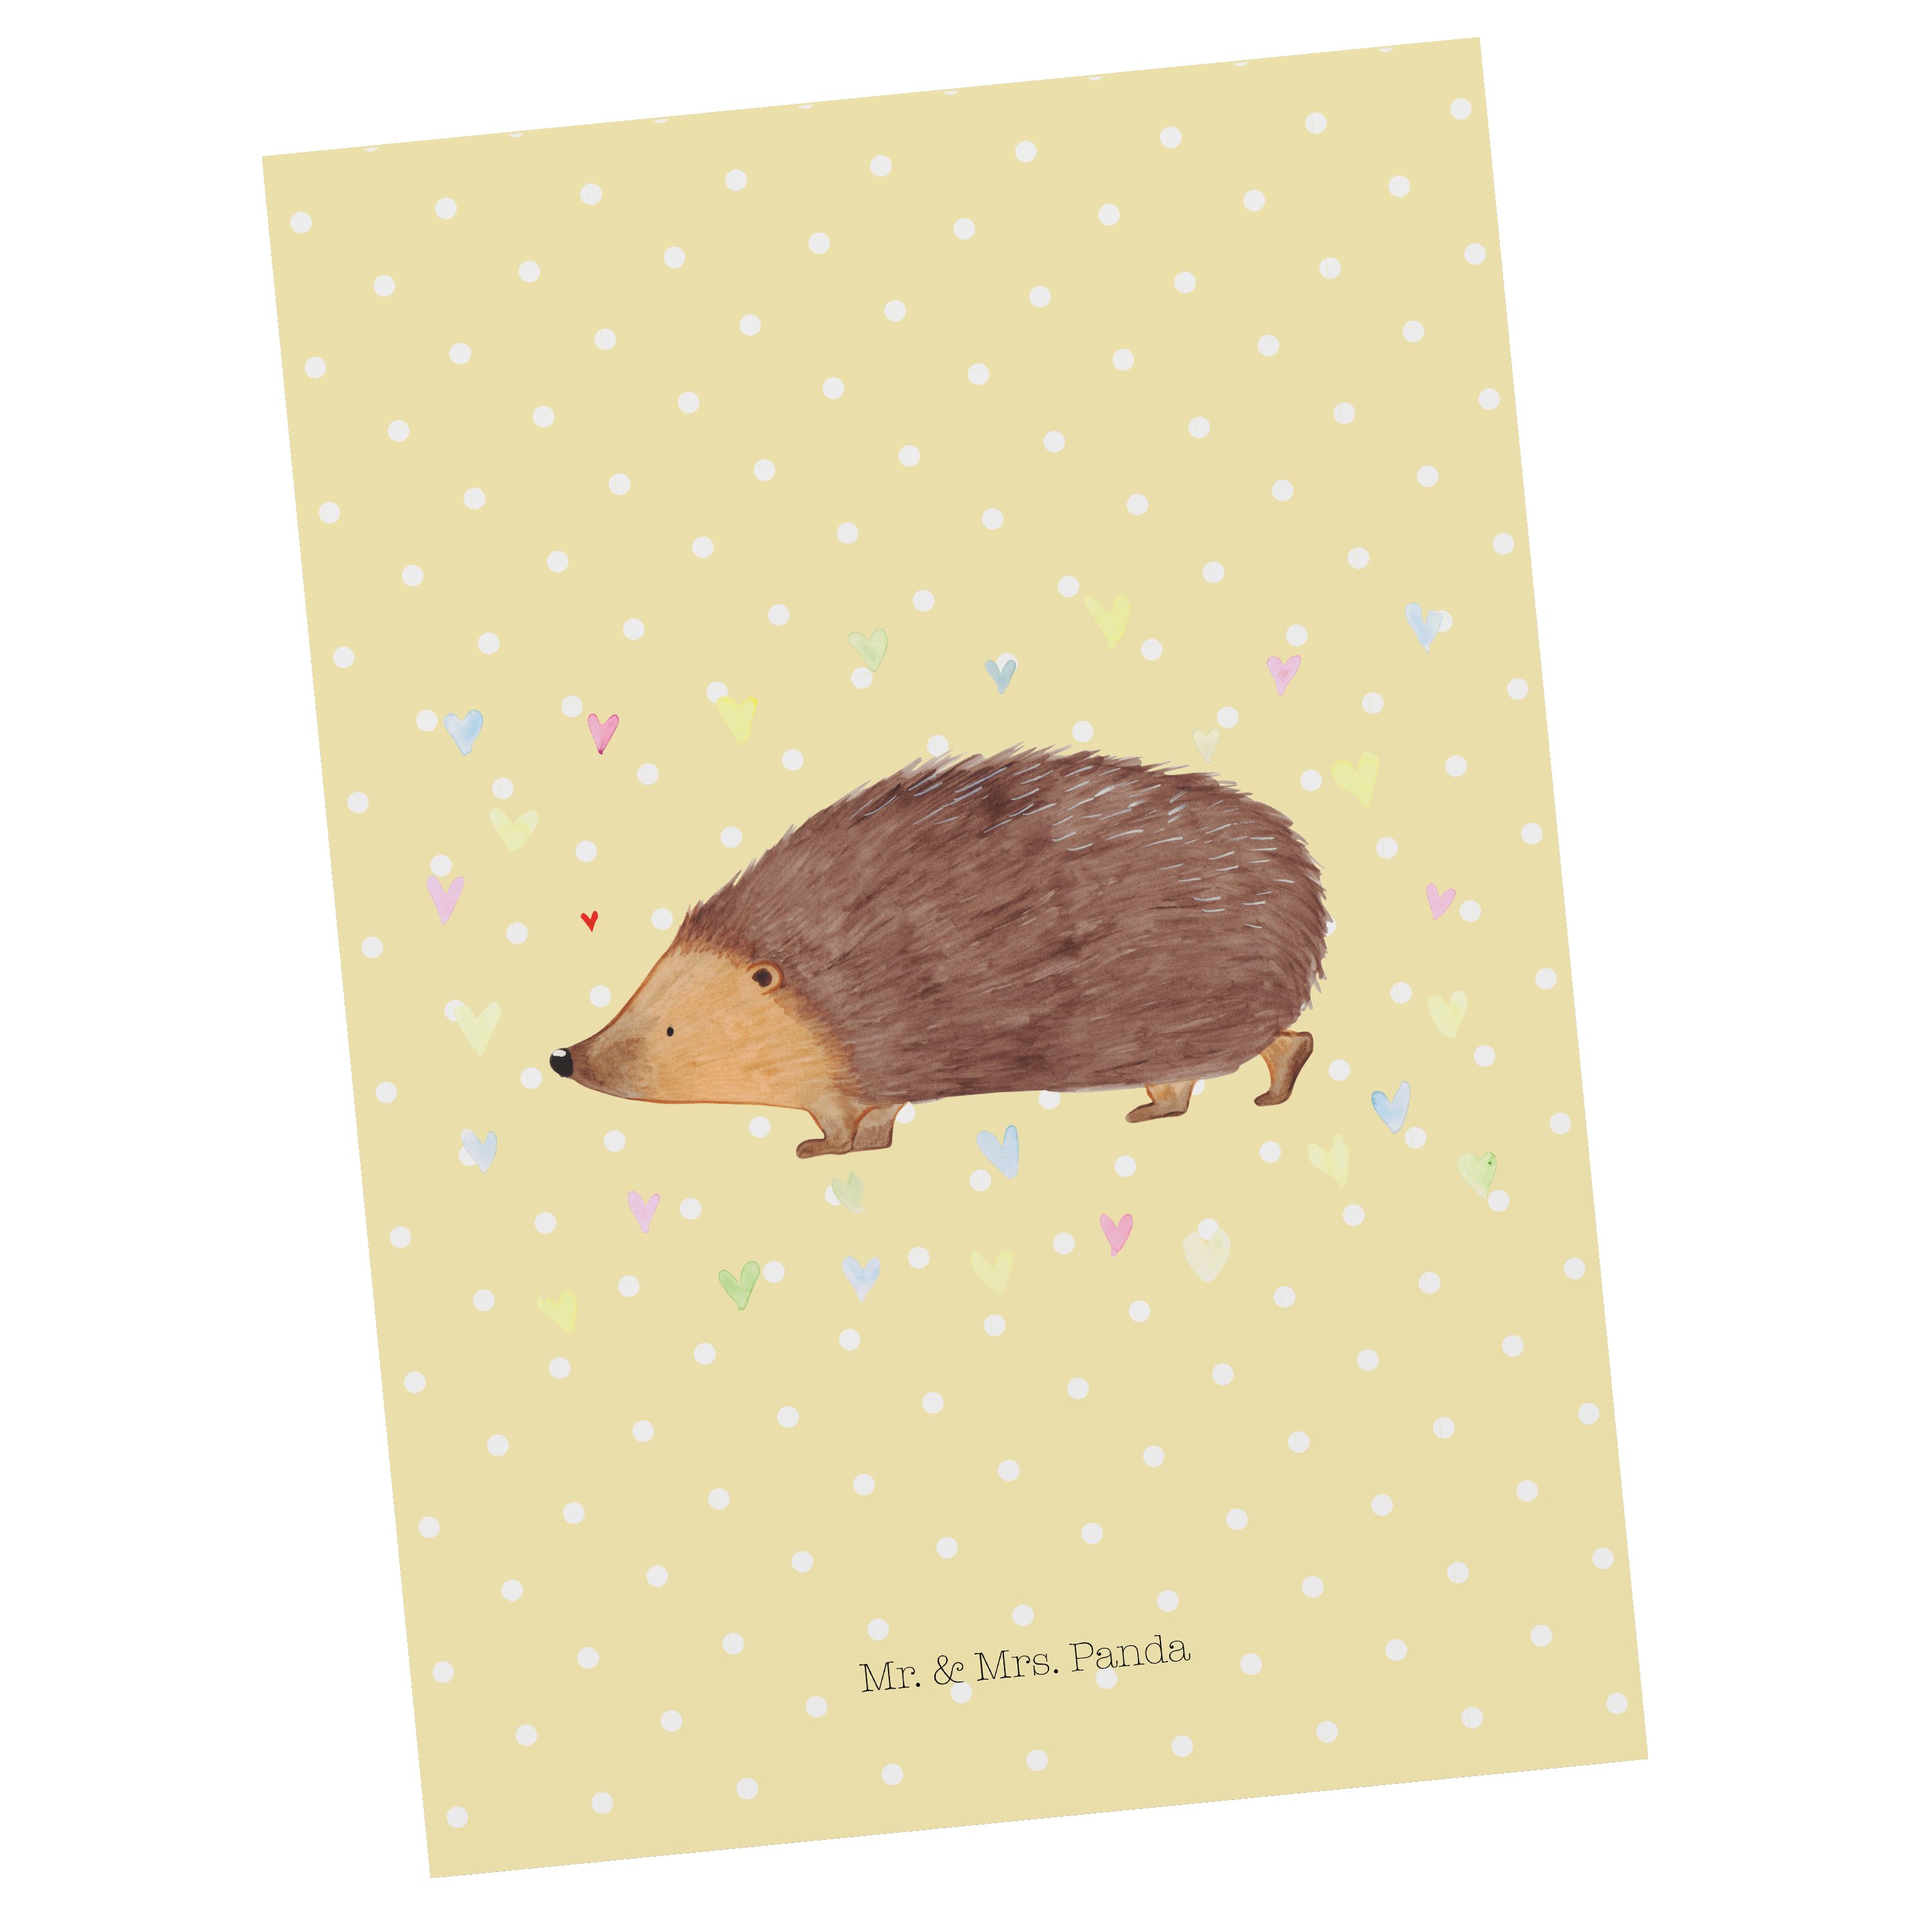 Mr. & Mrs. Panda Postkarte Igel Herzen - Gelb Pastell - Geschenk, Leben, Einladung, Gute Laune